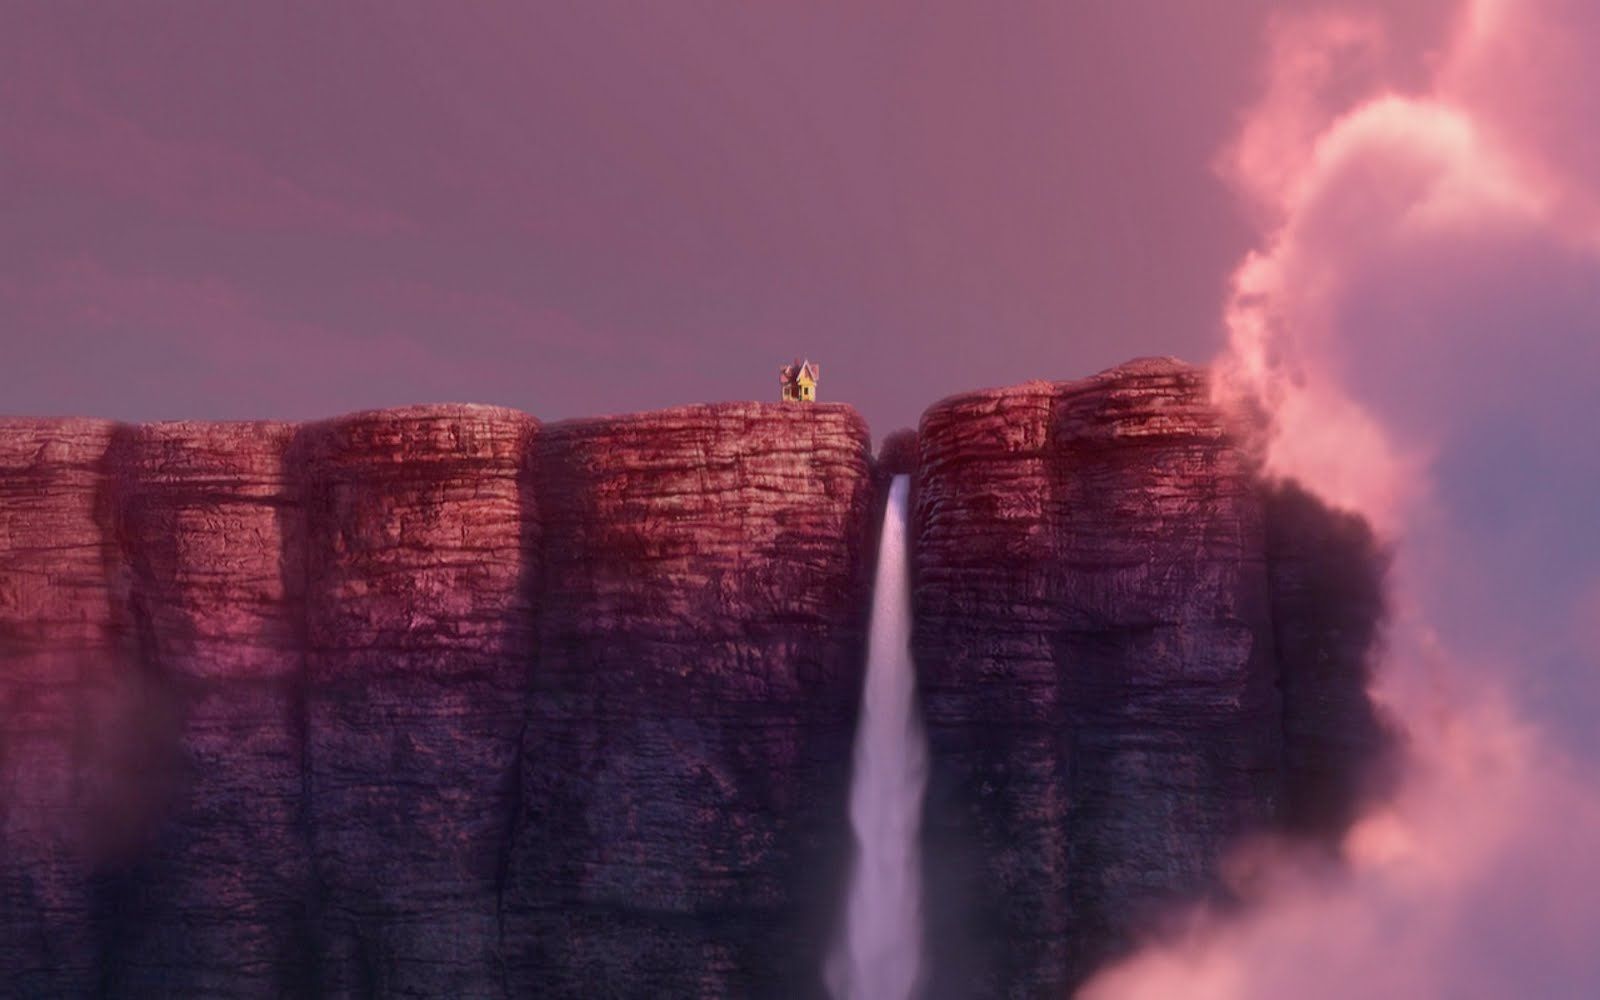 Wallpaper - Fond d'écran - Disney - Pixar - Là-haut - Le Monde des Gifs